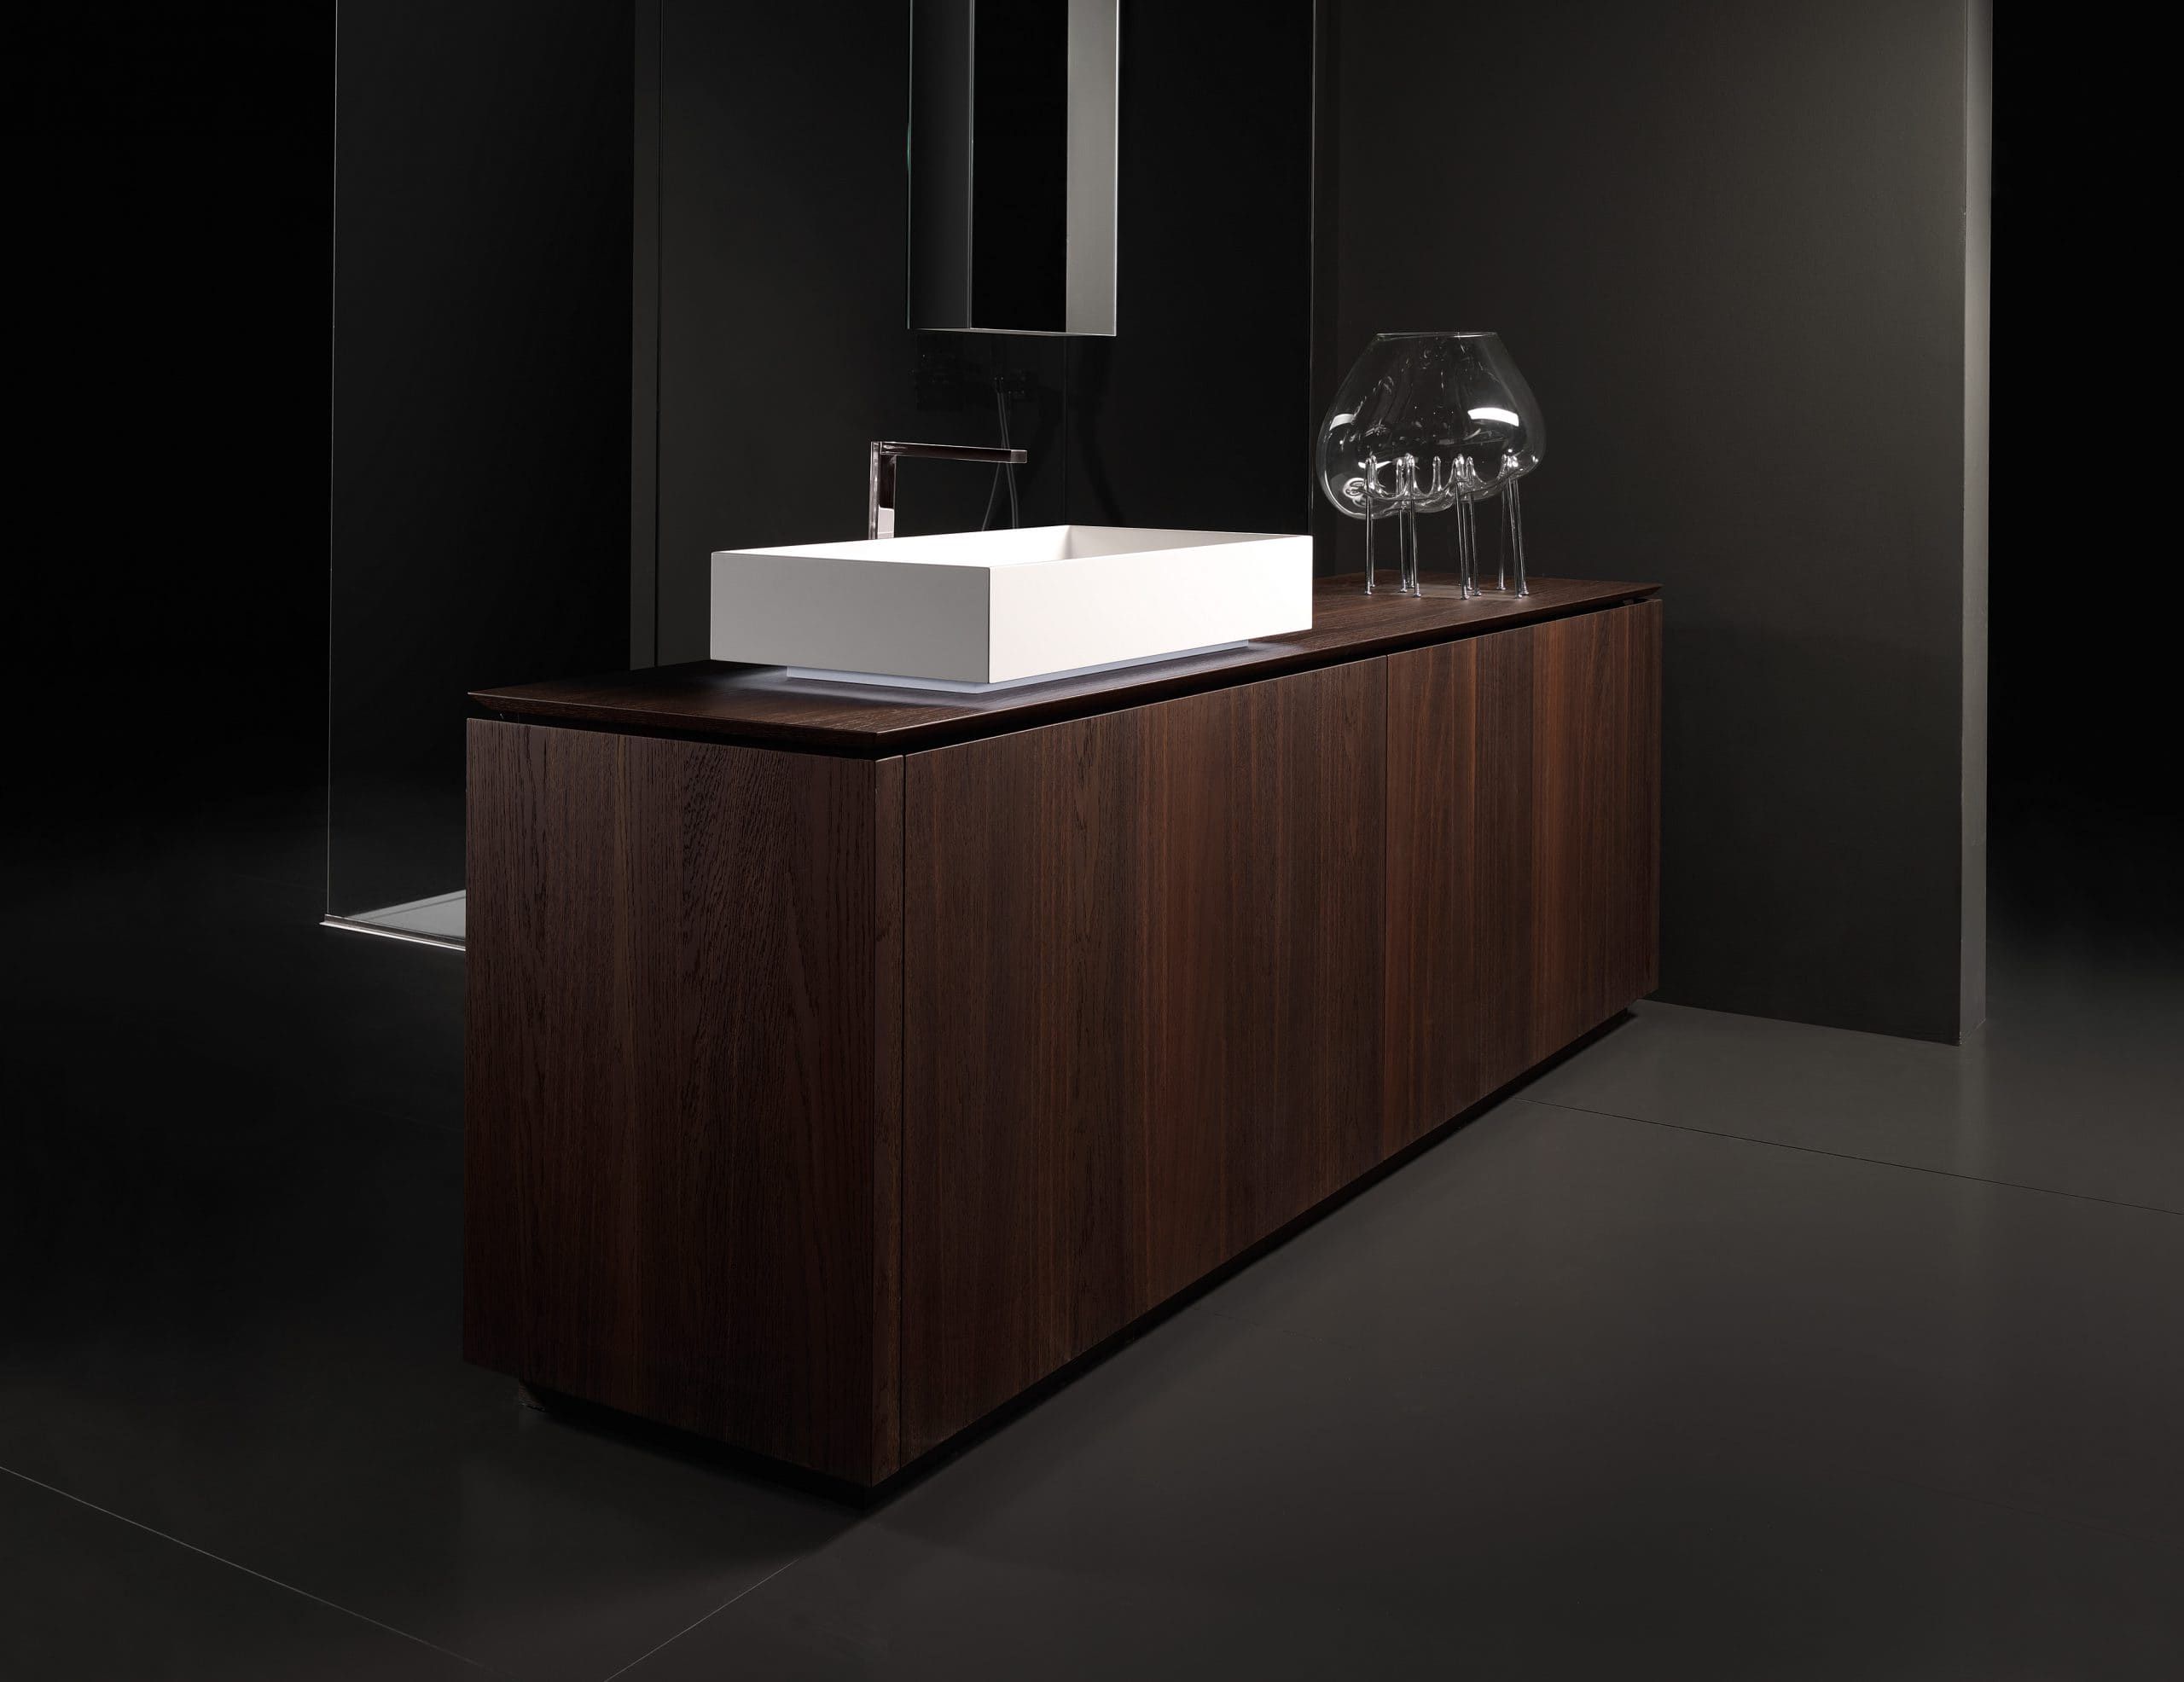 Puro contemporary Italian bathroom vanity with brown veneer wood